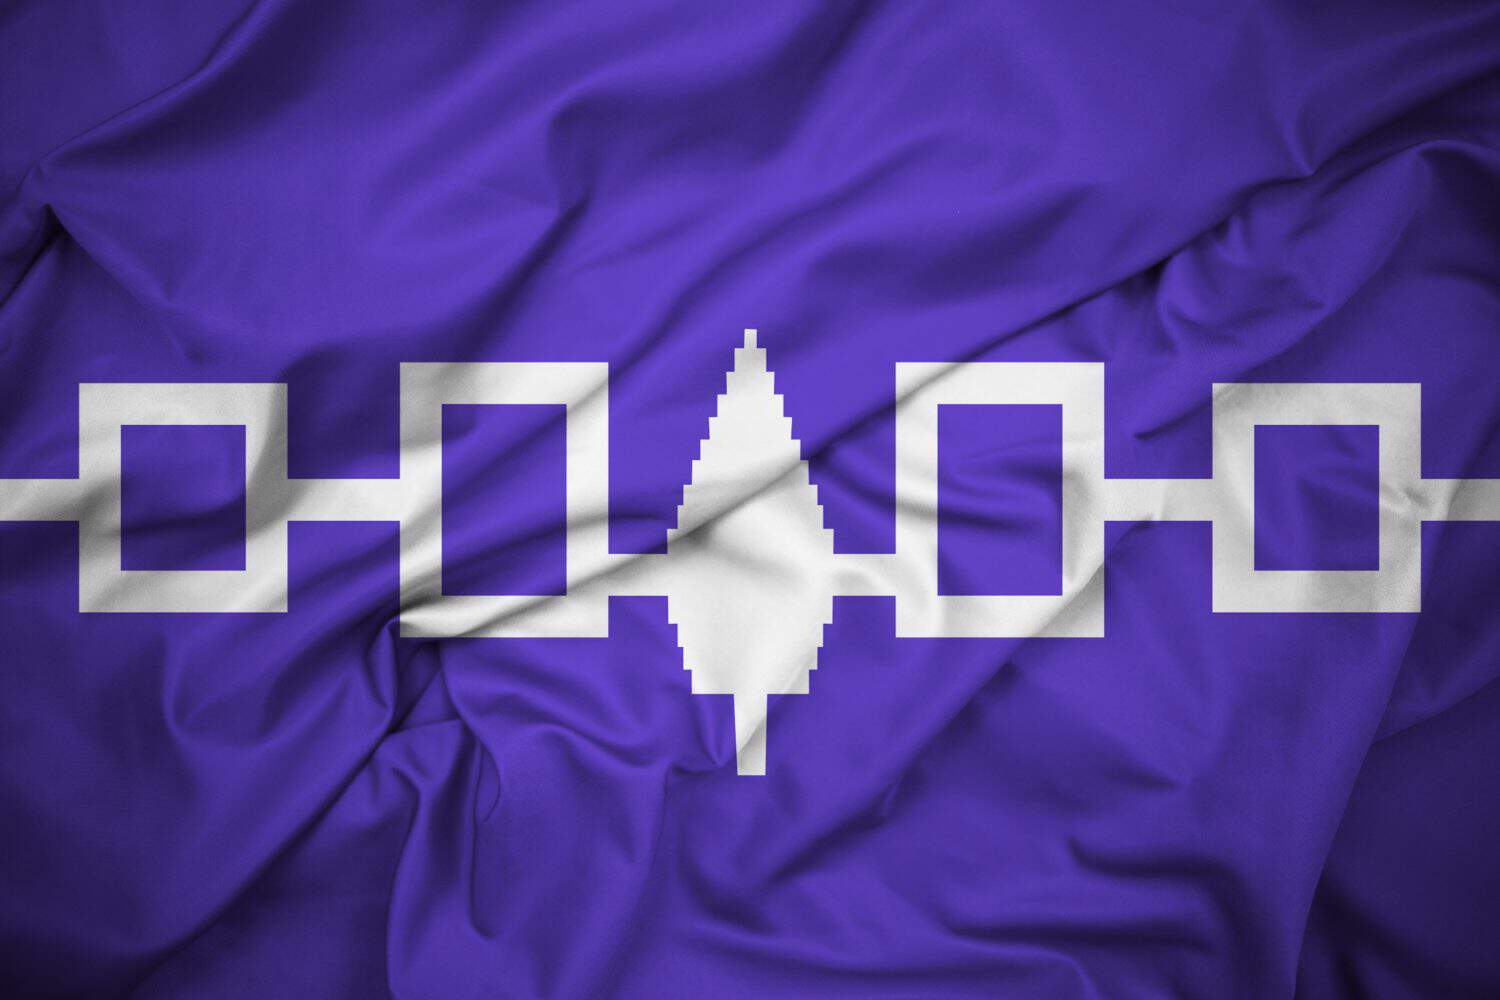 Iroquois Flag (Haudenosaunee). Eastern White Pine on Horizontal Purple Background. Silk Fabric, Delatiled Texture.